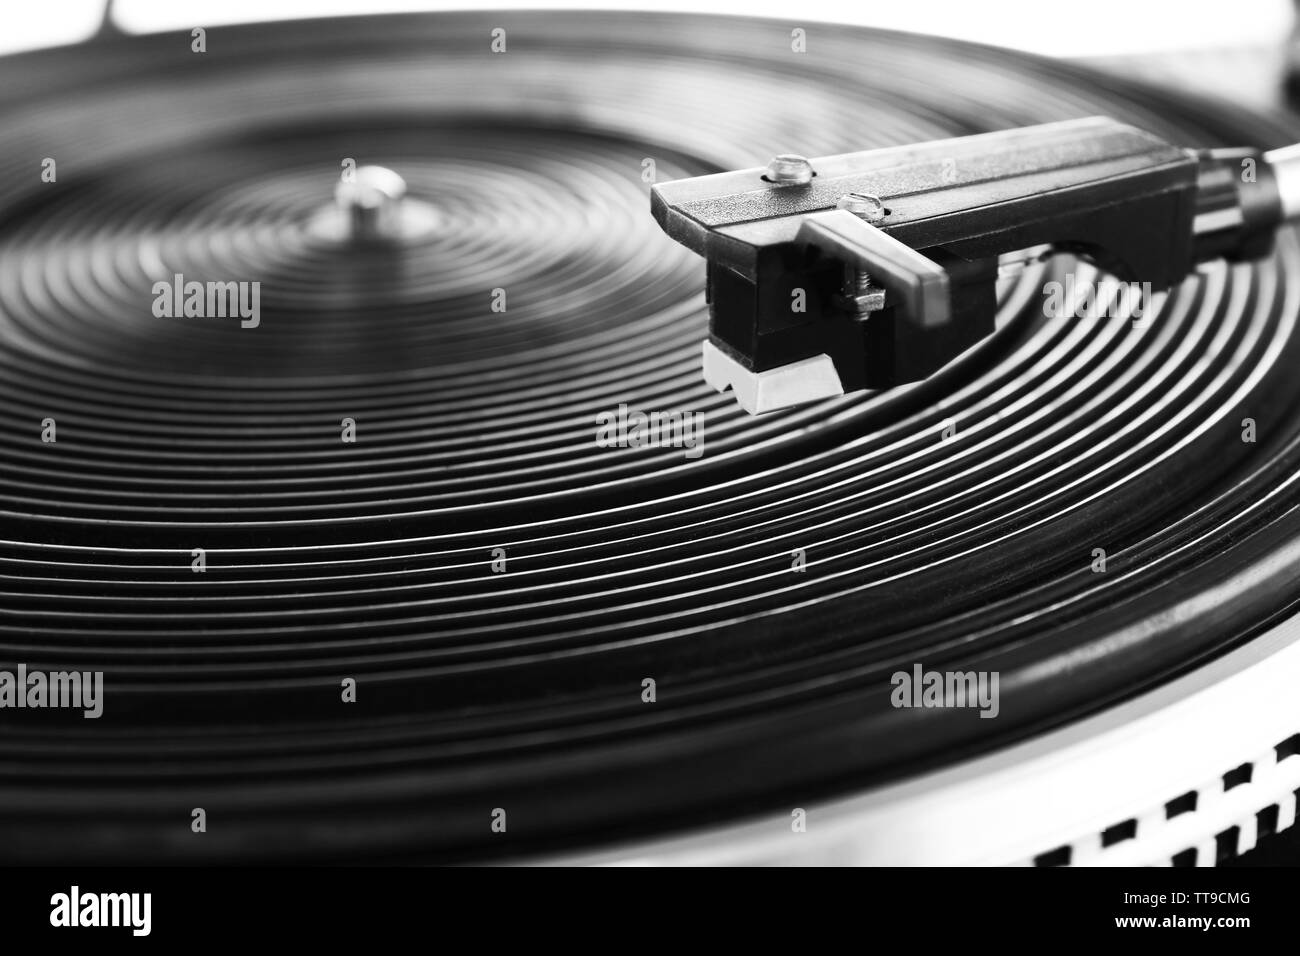 Vintage Turntable Vinyl Record Player Close Up Stock Photo Alamy